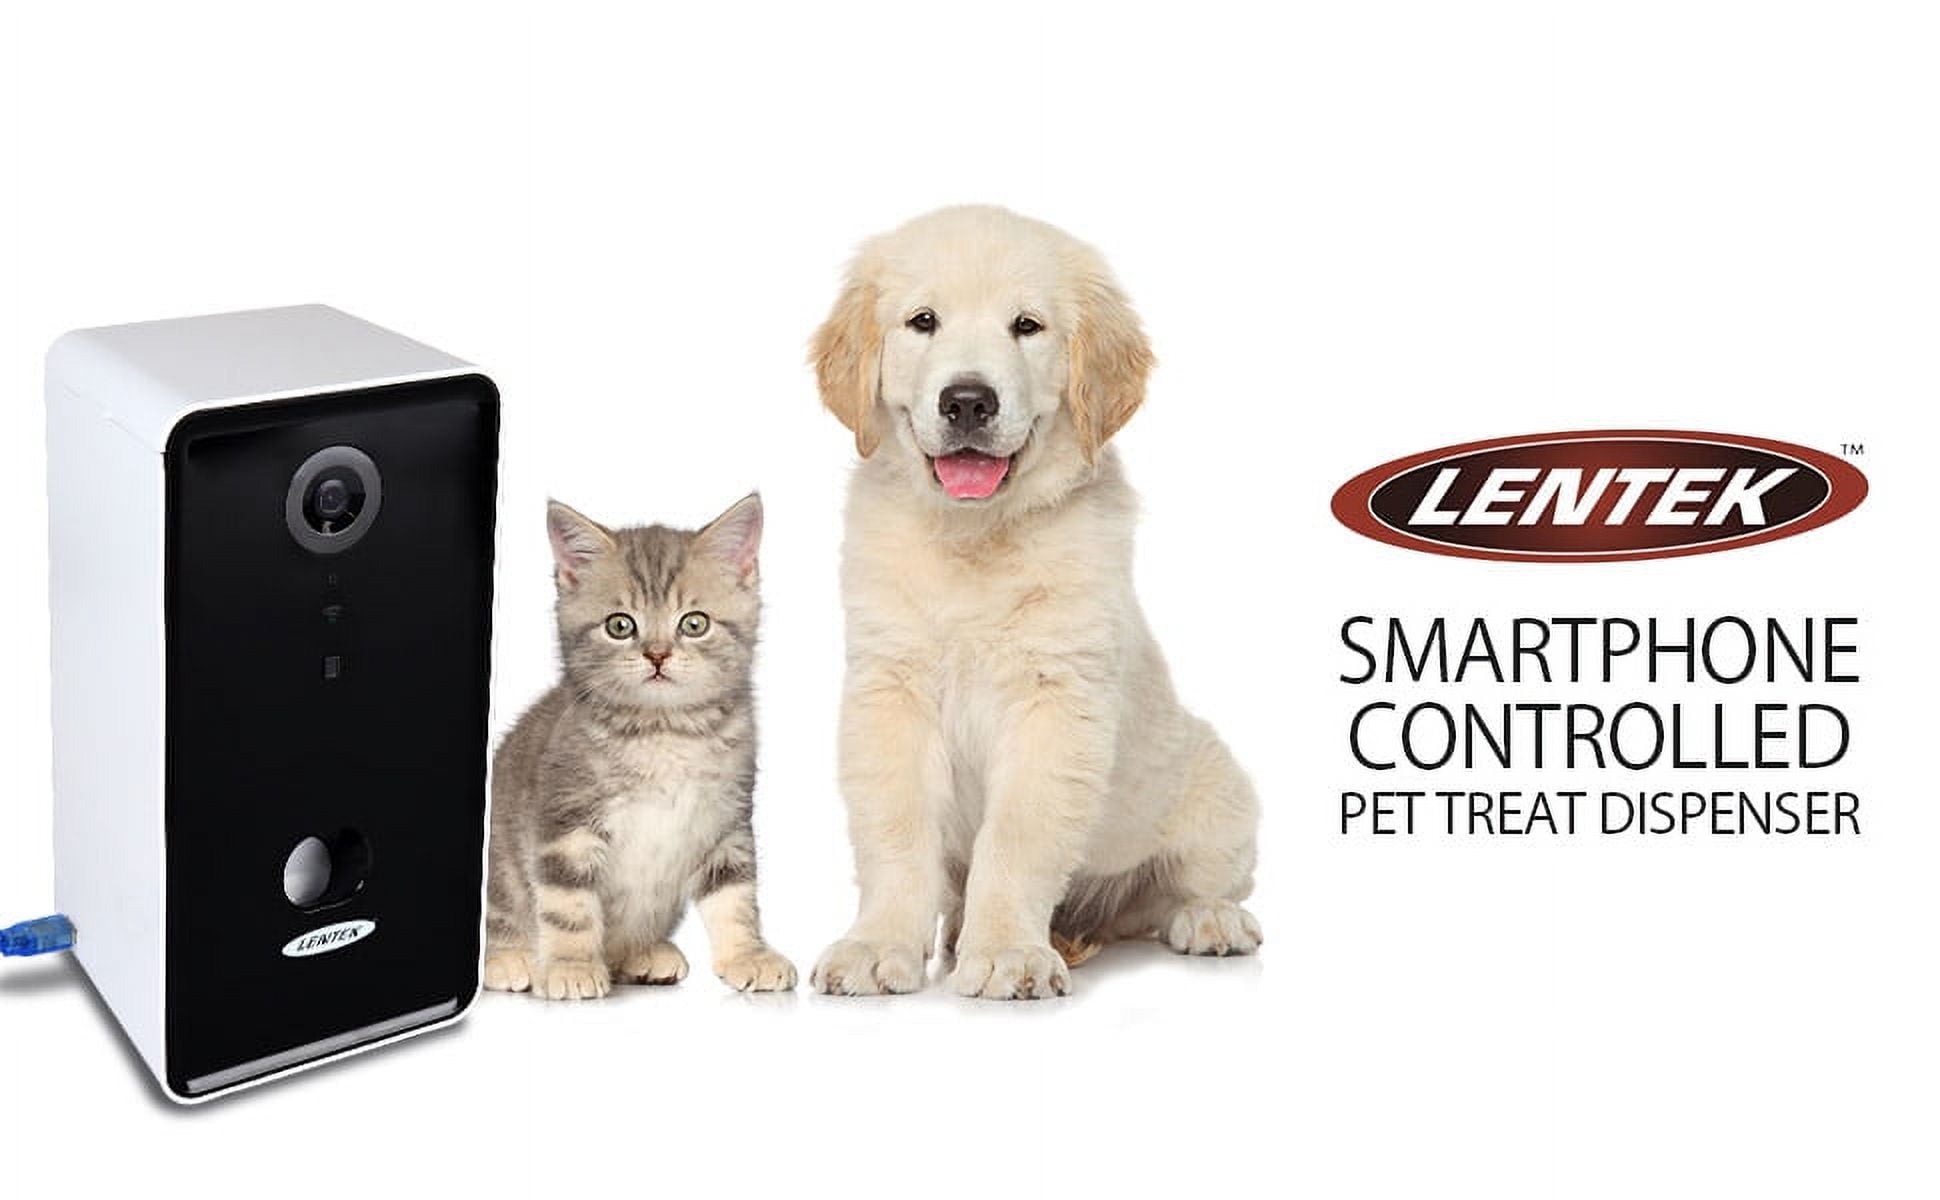 Lentek Smartphone-Controlled Pet Treat Dispenser W Camera